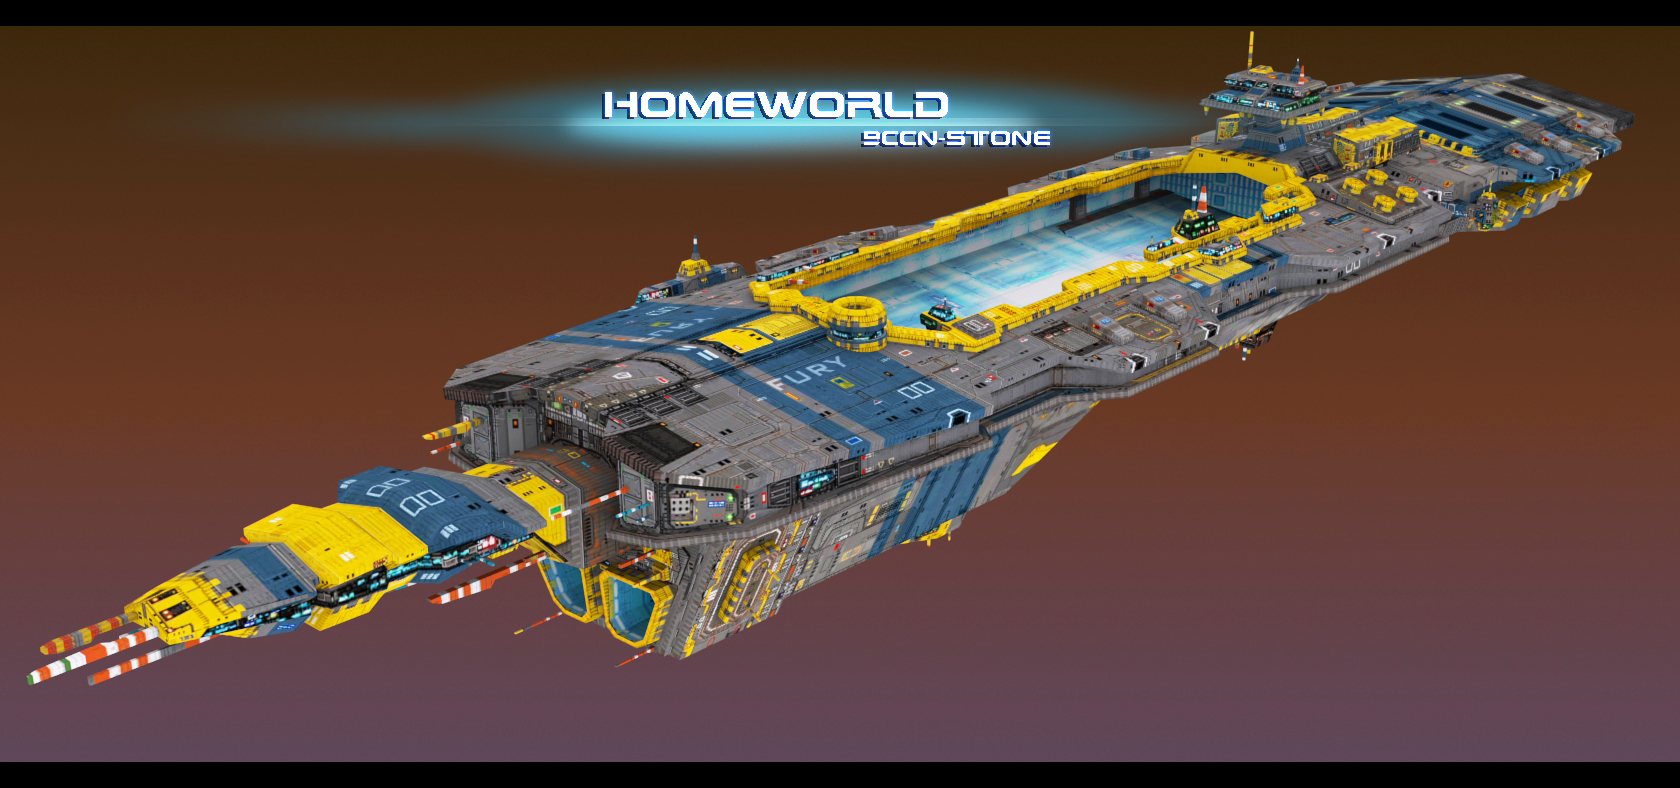 Rpg modes. Хиигара. Флот Хиигары Homeworld. Homeworld Hiigaran Carrier. Dropzone Commander.